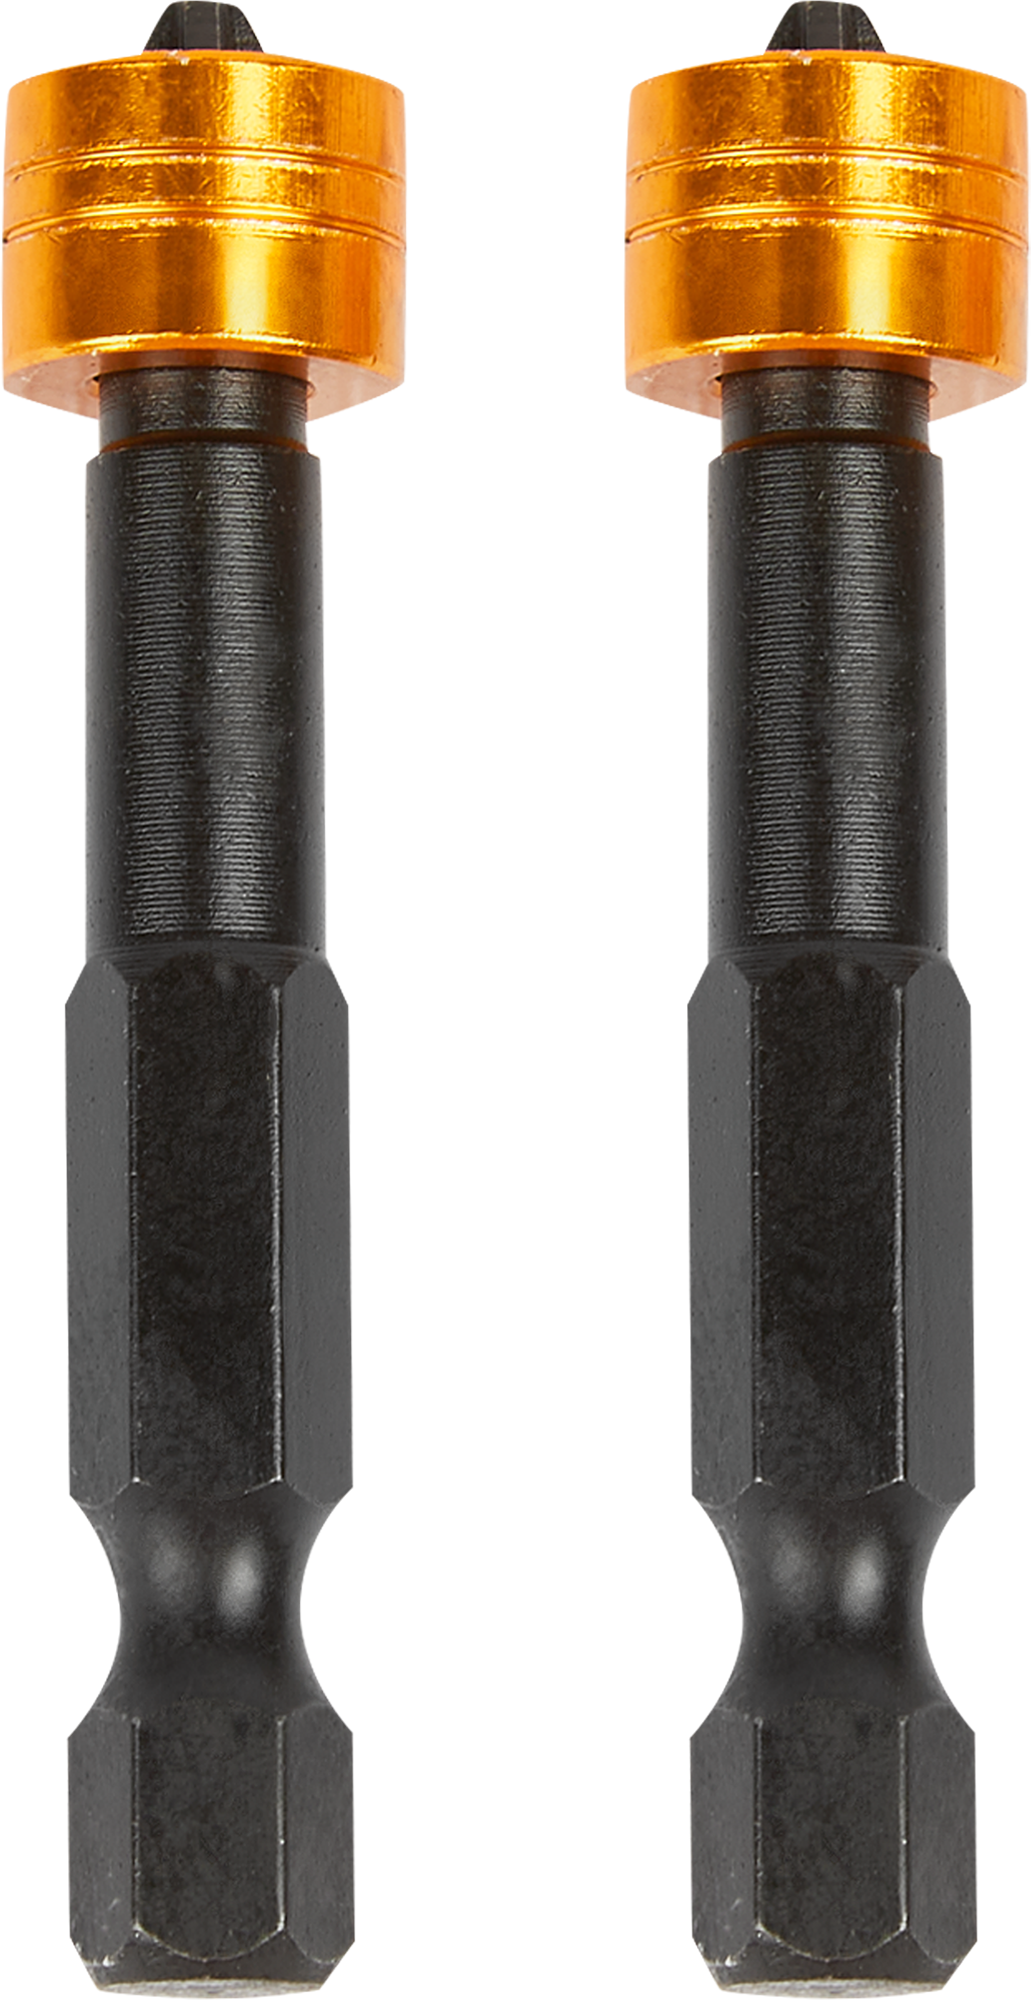 Бита крестовая магнитная Rage by Vira 554134 PZ2x50 мм, 2 шт.